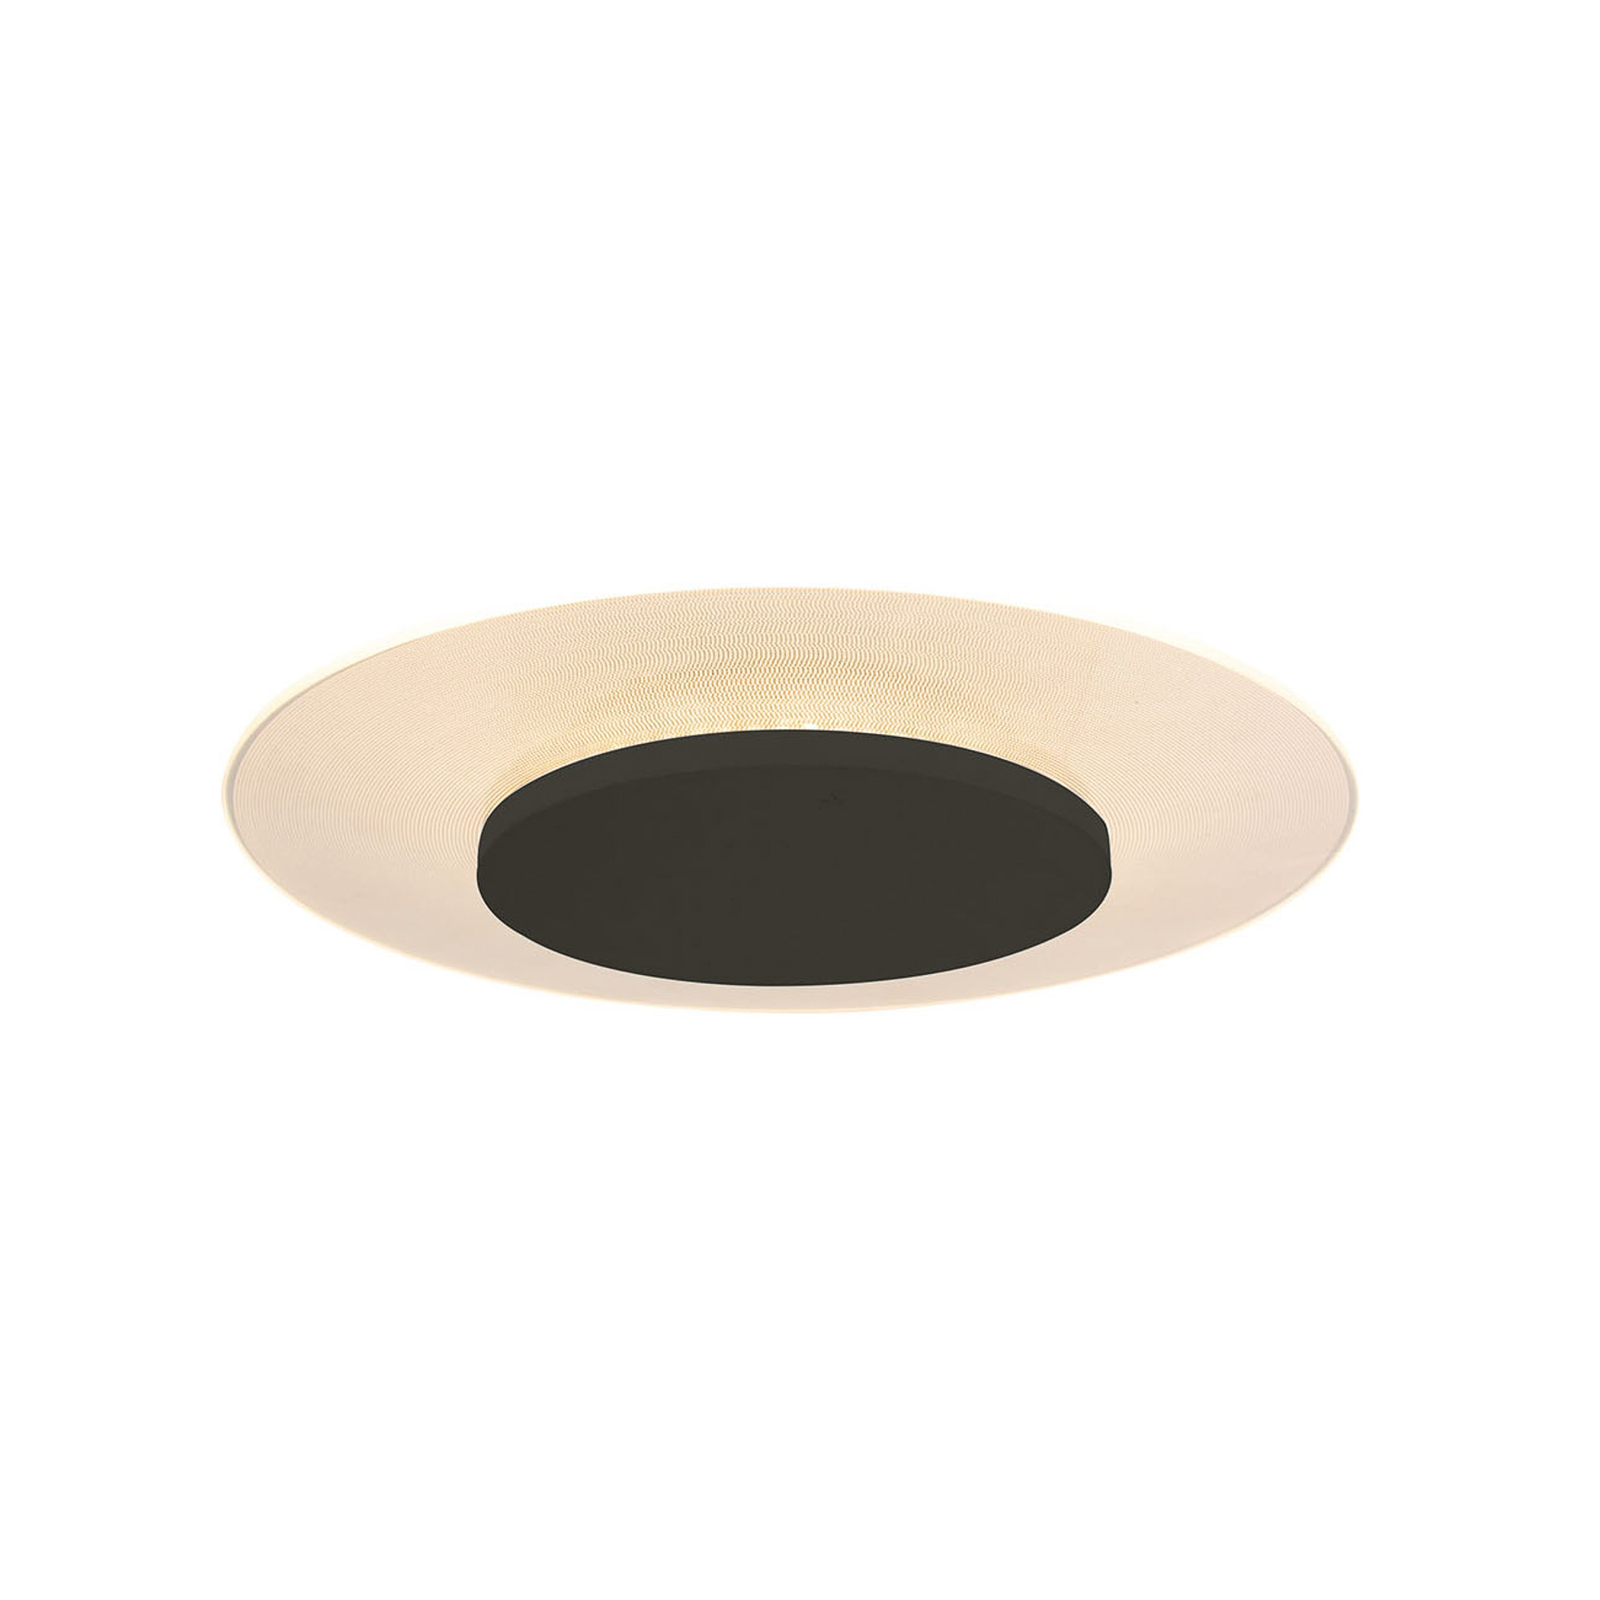 LED-kattovalaisin Lido, musta, Ø 36cm